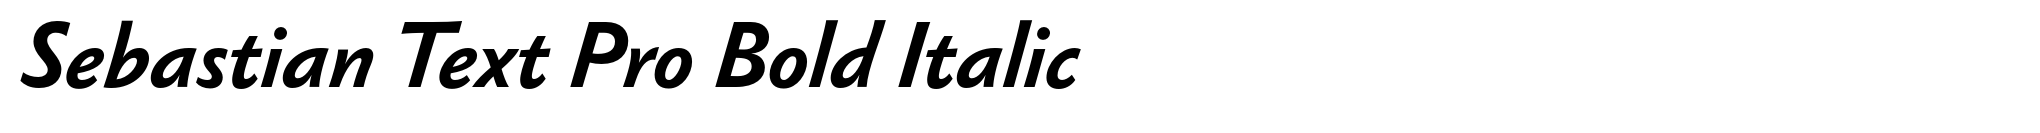 Sebastian Text Pro Bold Italic image